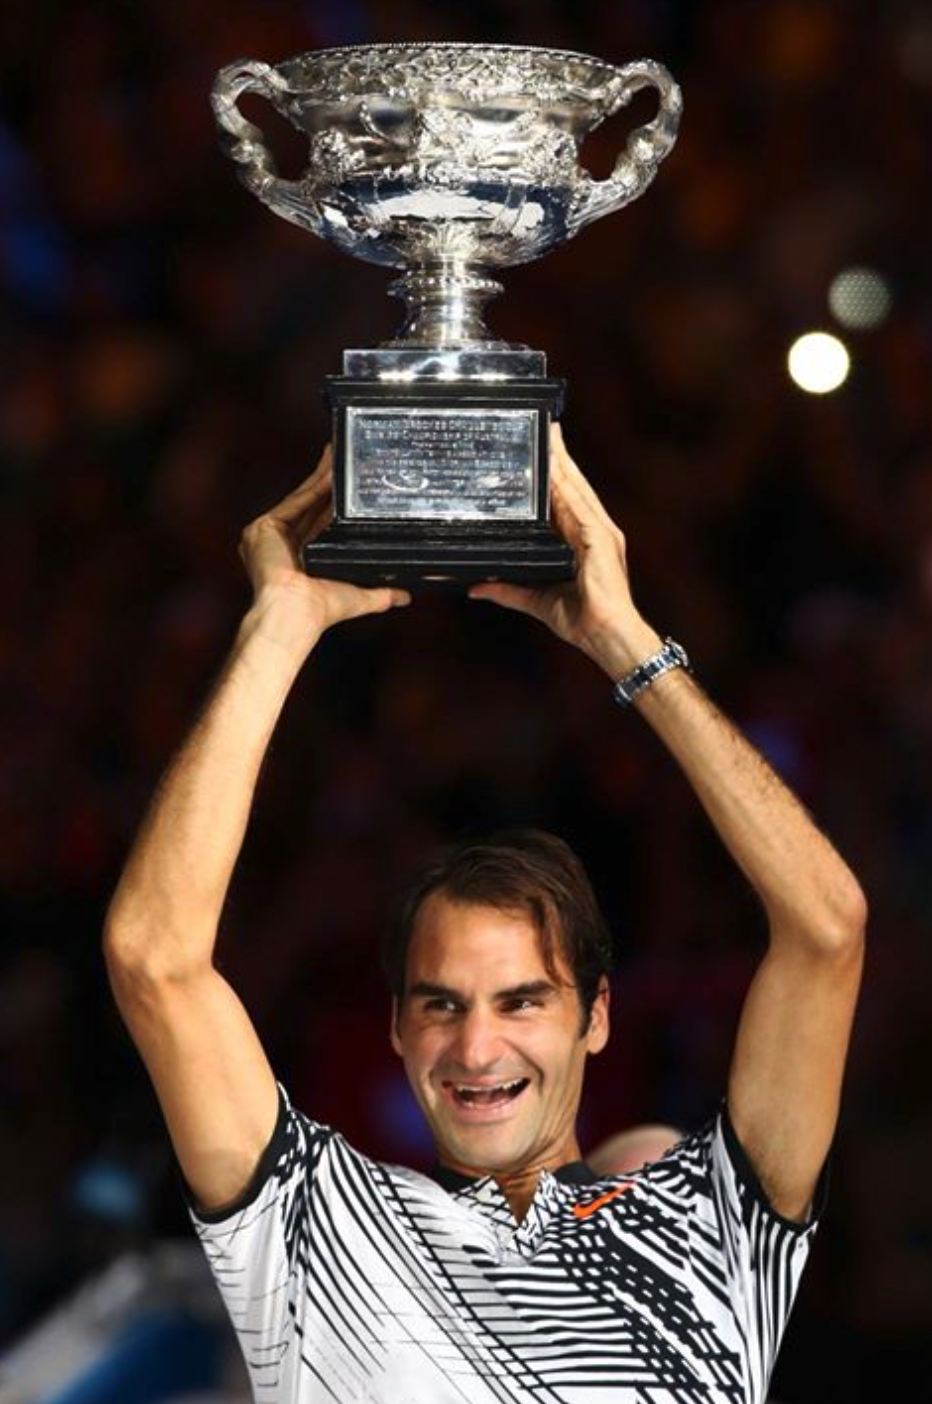 18. Titel Federer